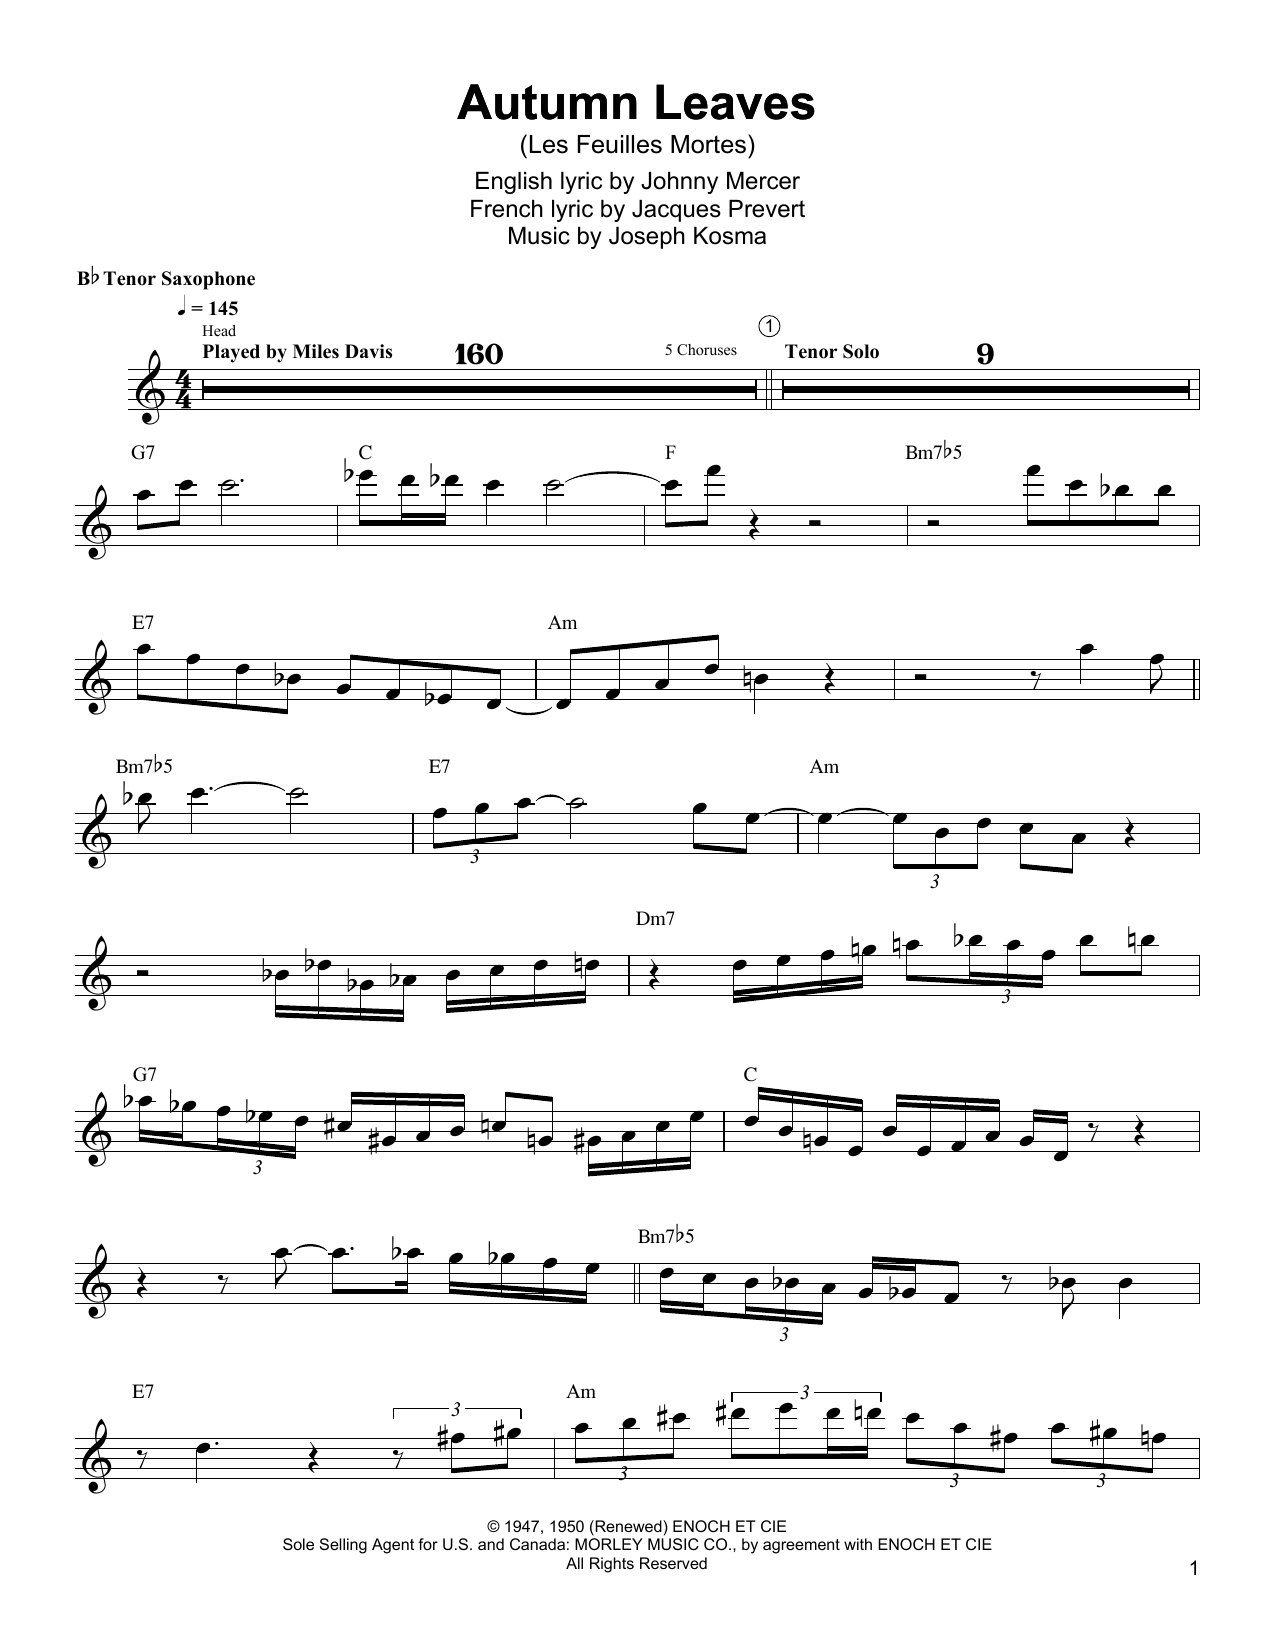 Wayne Shorter Autumn Leaves Sheet Music Notes & Chords for Tenor Sax Transcription - Download or Print PDF